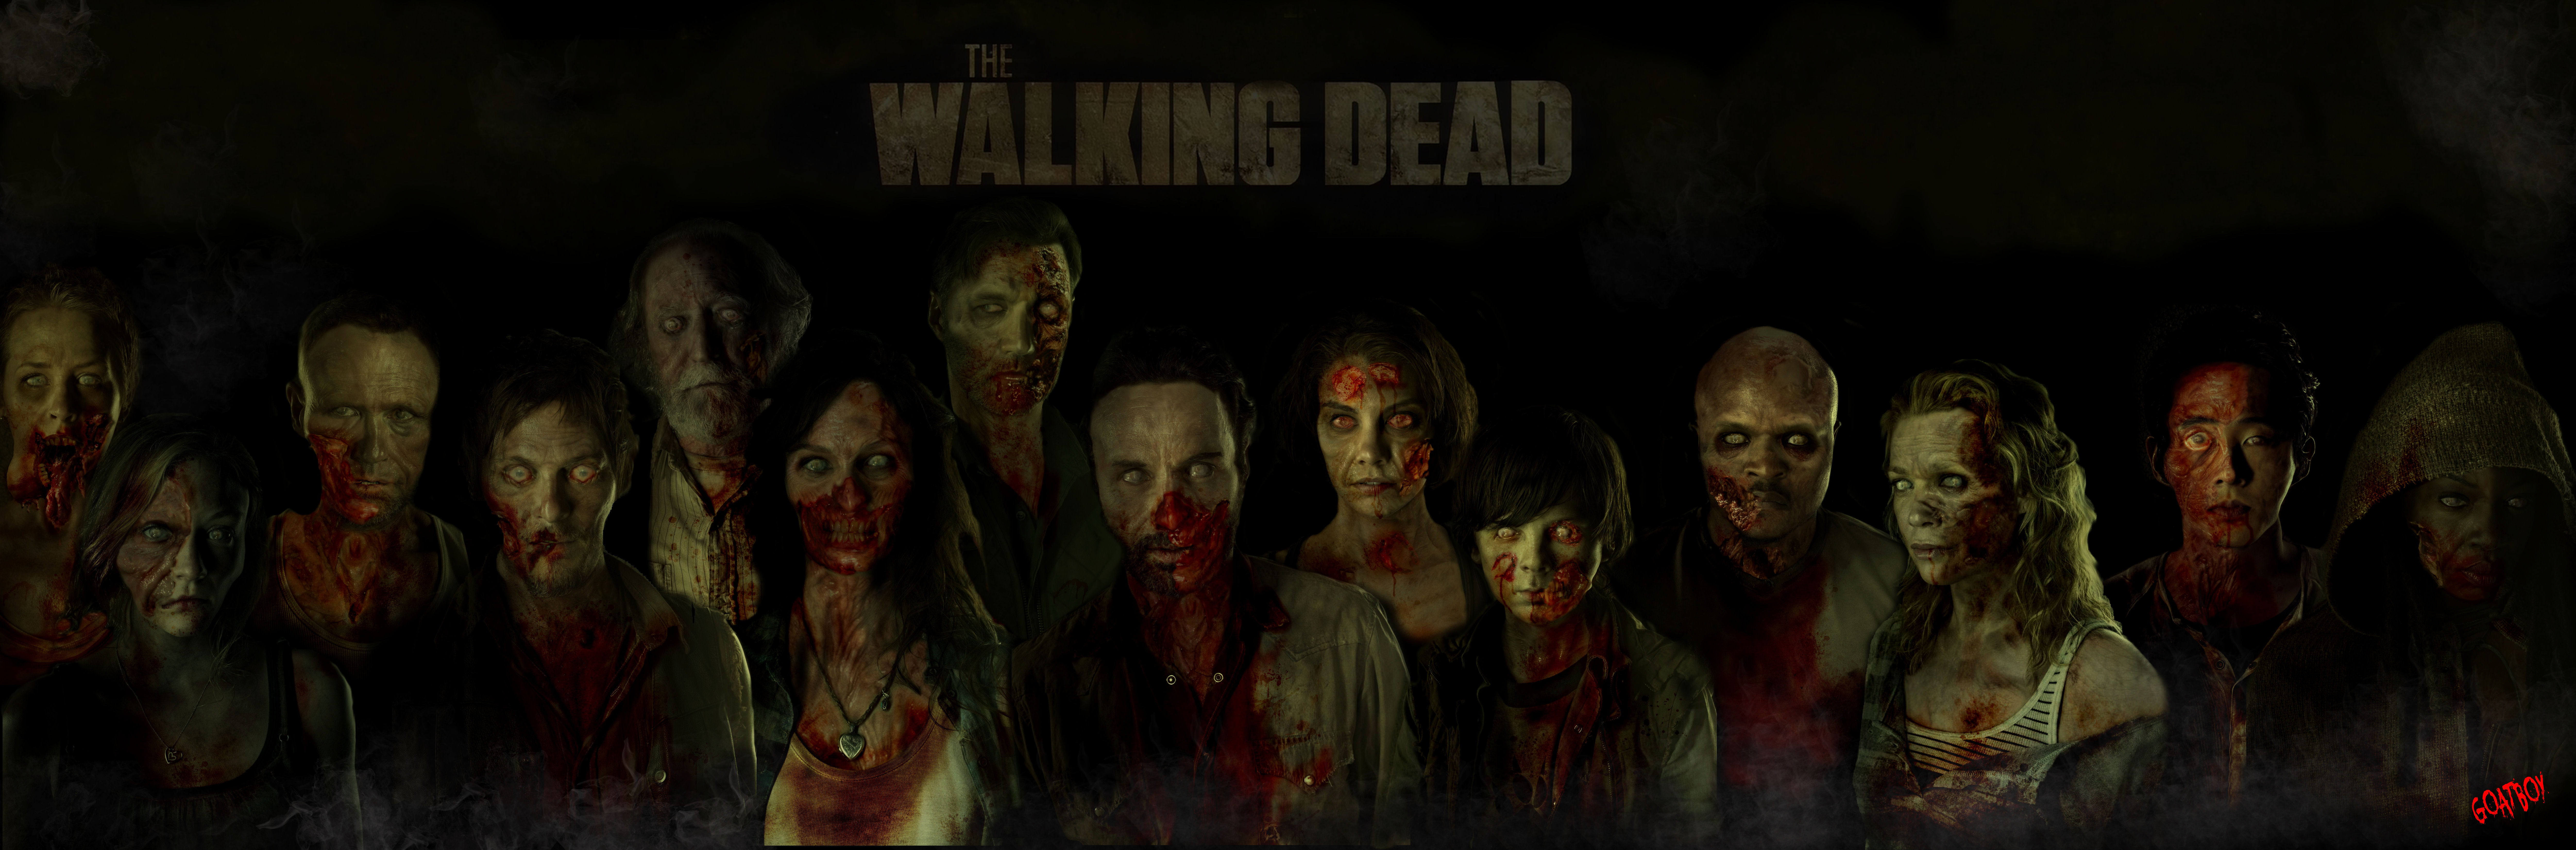 Add media Report RSS The Walking Dead  Zombie Cast view original